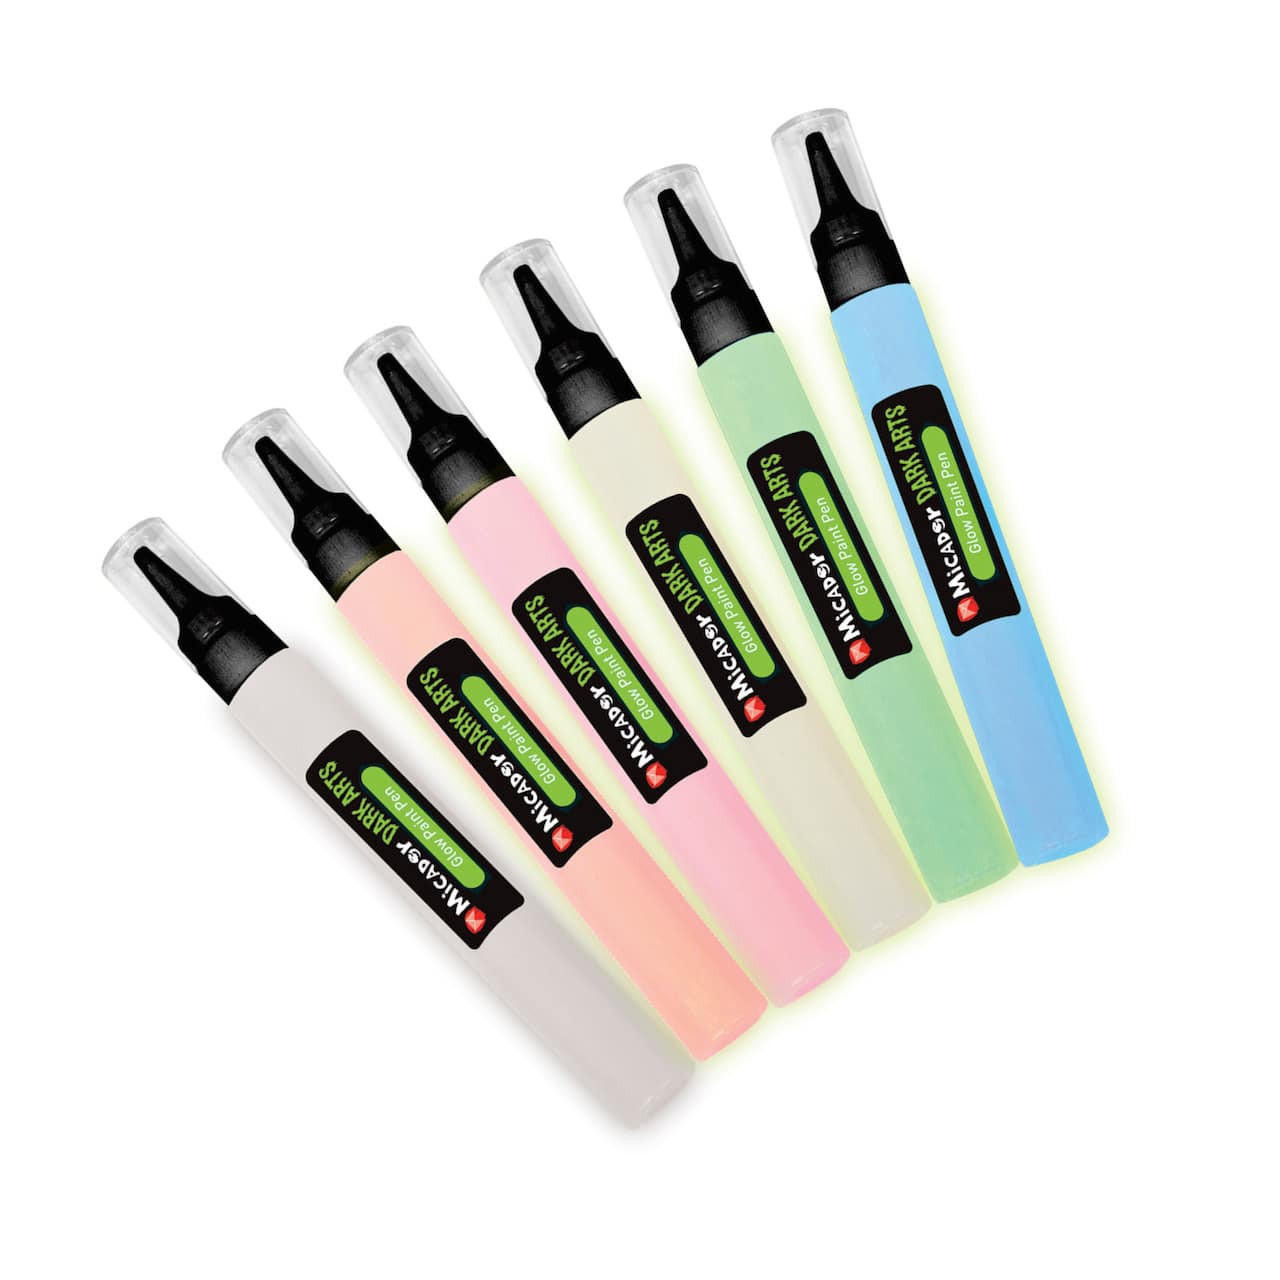 https://cdn11.bigcommerce.com/s-9uf88xhege/images/stencil/1280x1280/products/10386/99505/micador-dark-arts-glow-paint-pens-set-6-color-pen-set__10645.1700032060.jpg?c=1?imbypass=on